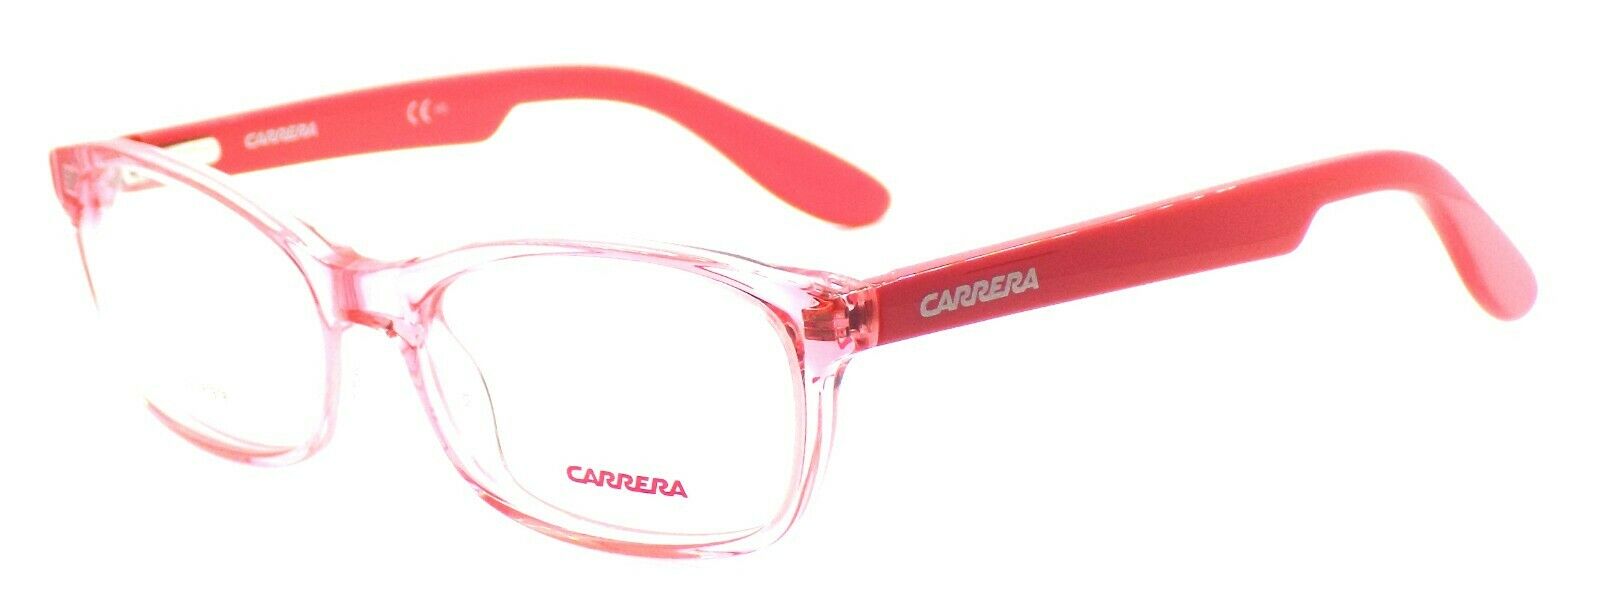 1-Carrera Carrerino 56 TSU Kids' Eyeglasses Frames 48-16-125 Pink Coral + CASE-762753804181-IKSpecs